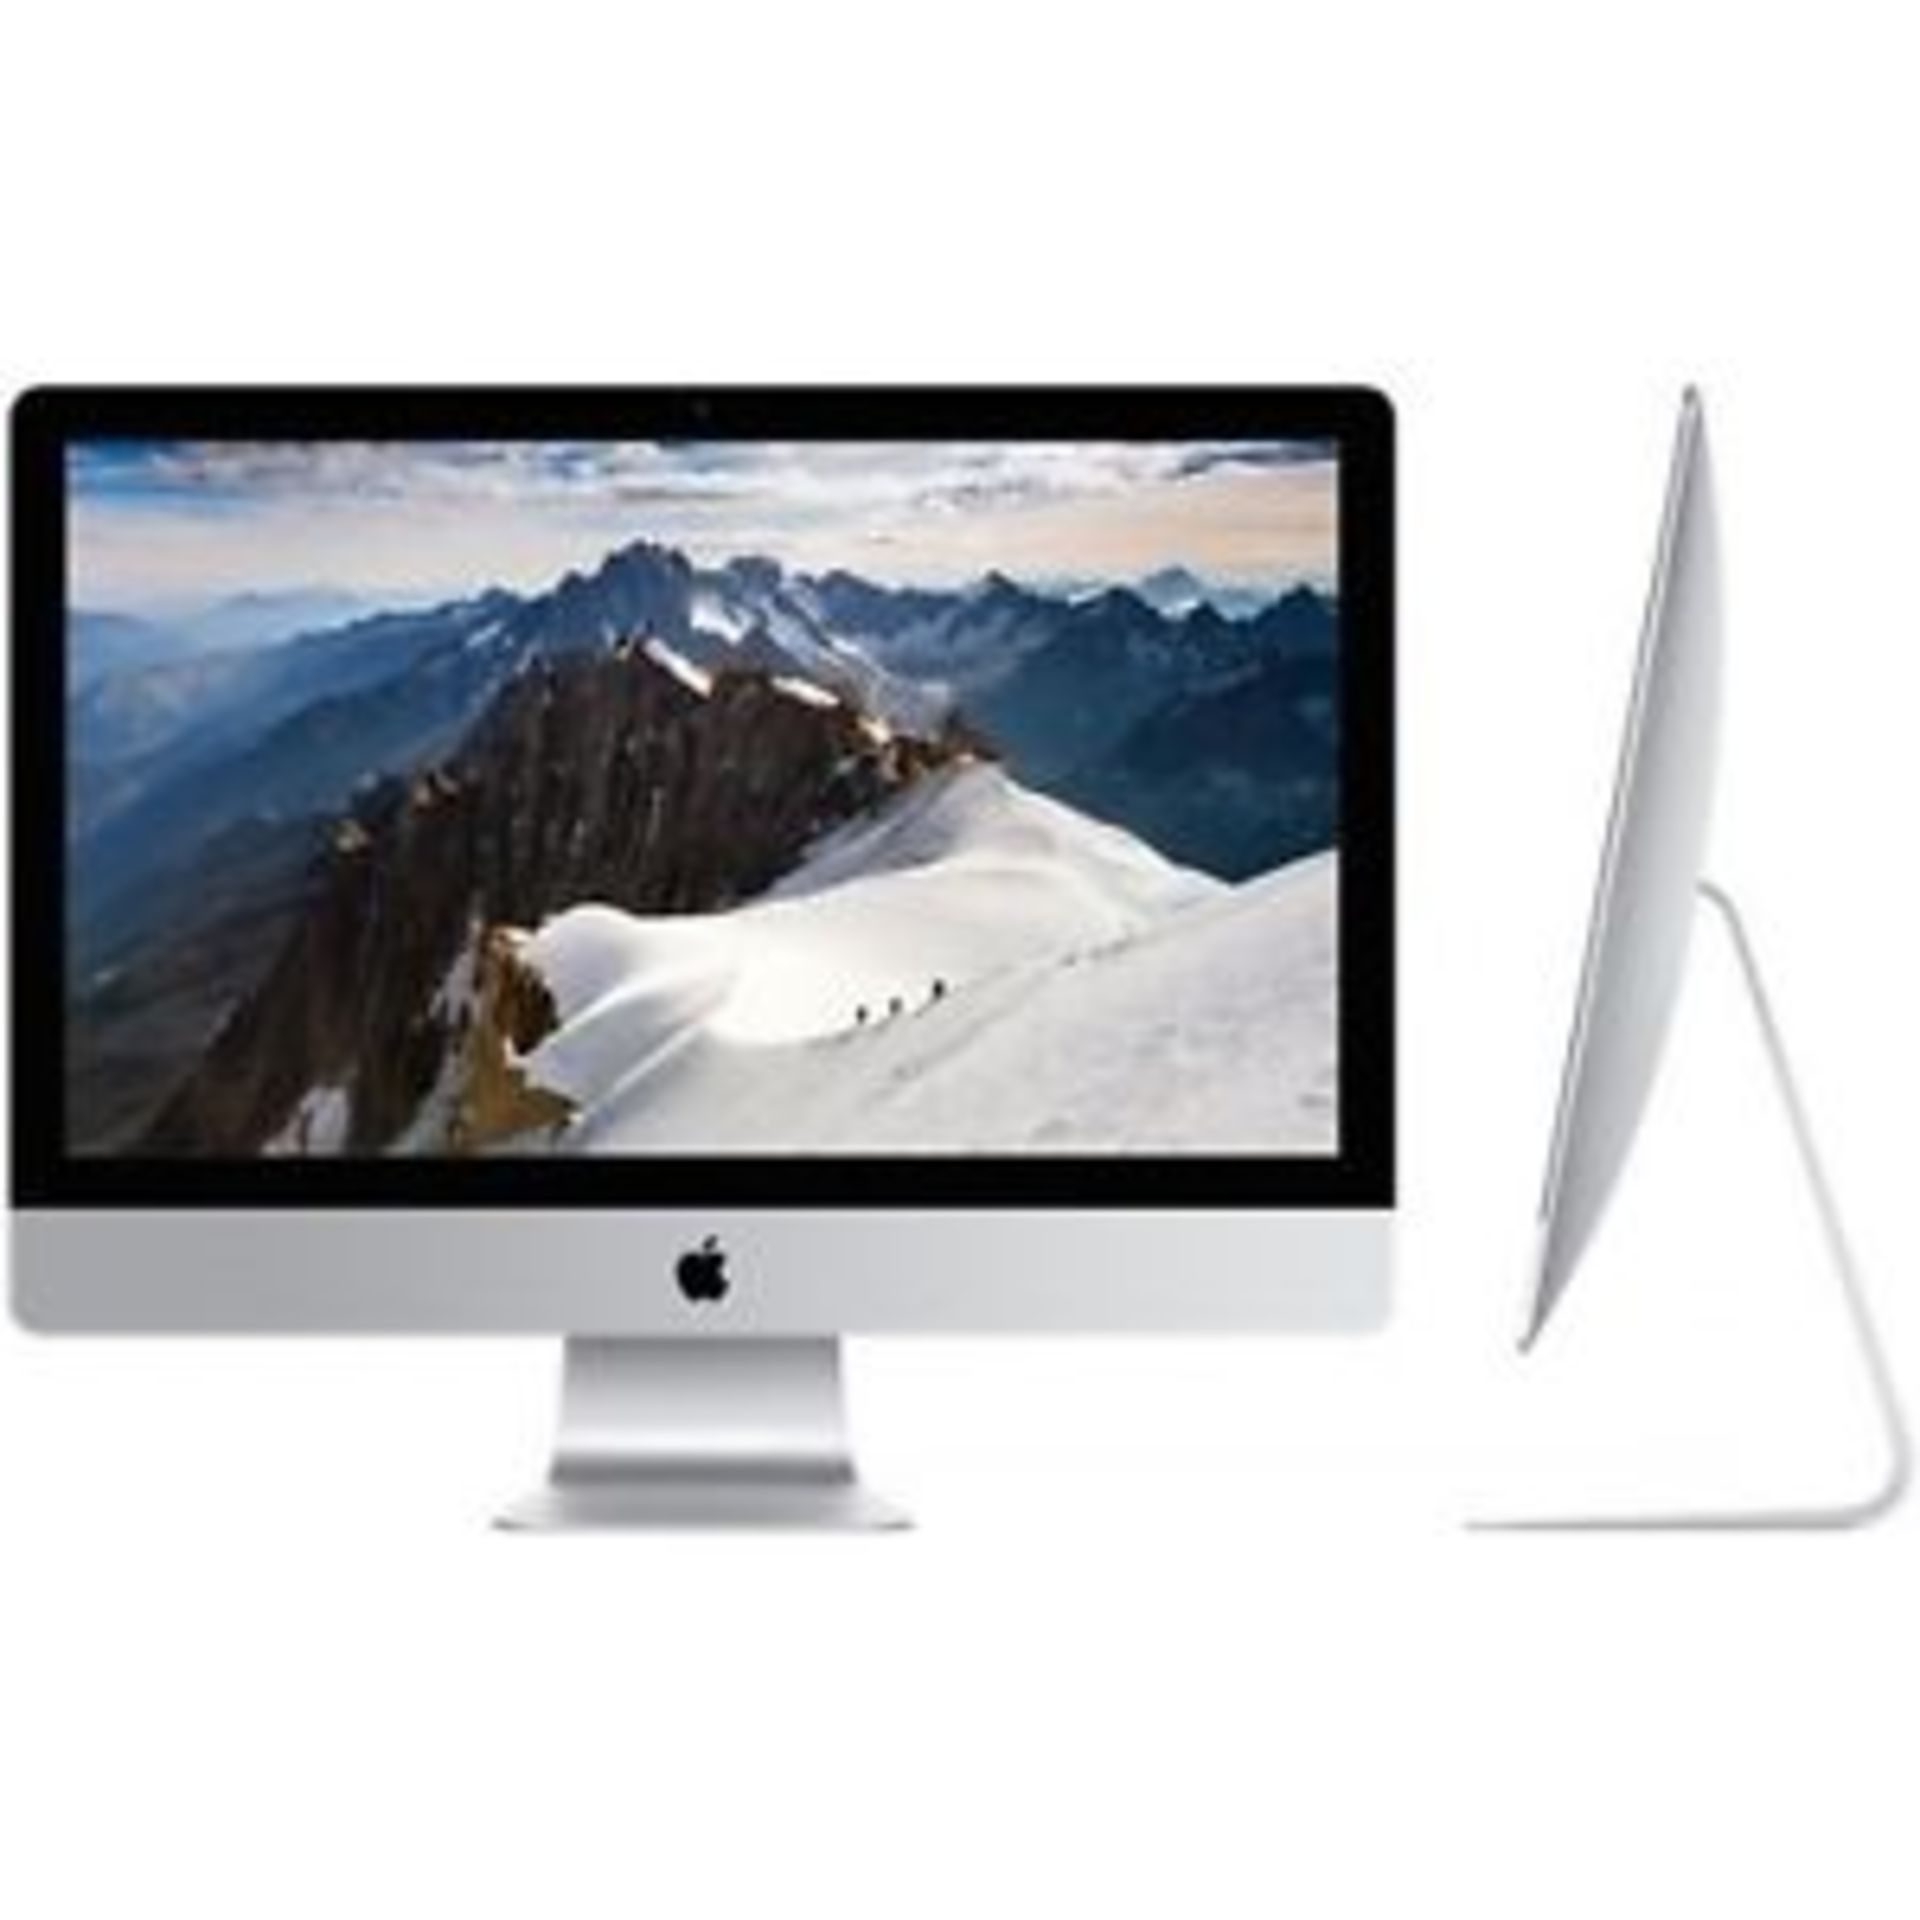 V Grade B Apple iMac Super Slim A1418 2014 - Core i5 - 1.4Ghz 4th Gen - 8GB - 500GB HDD - With